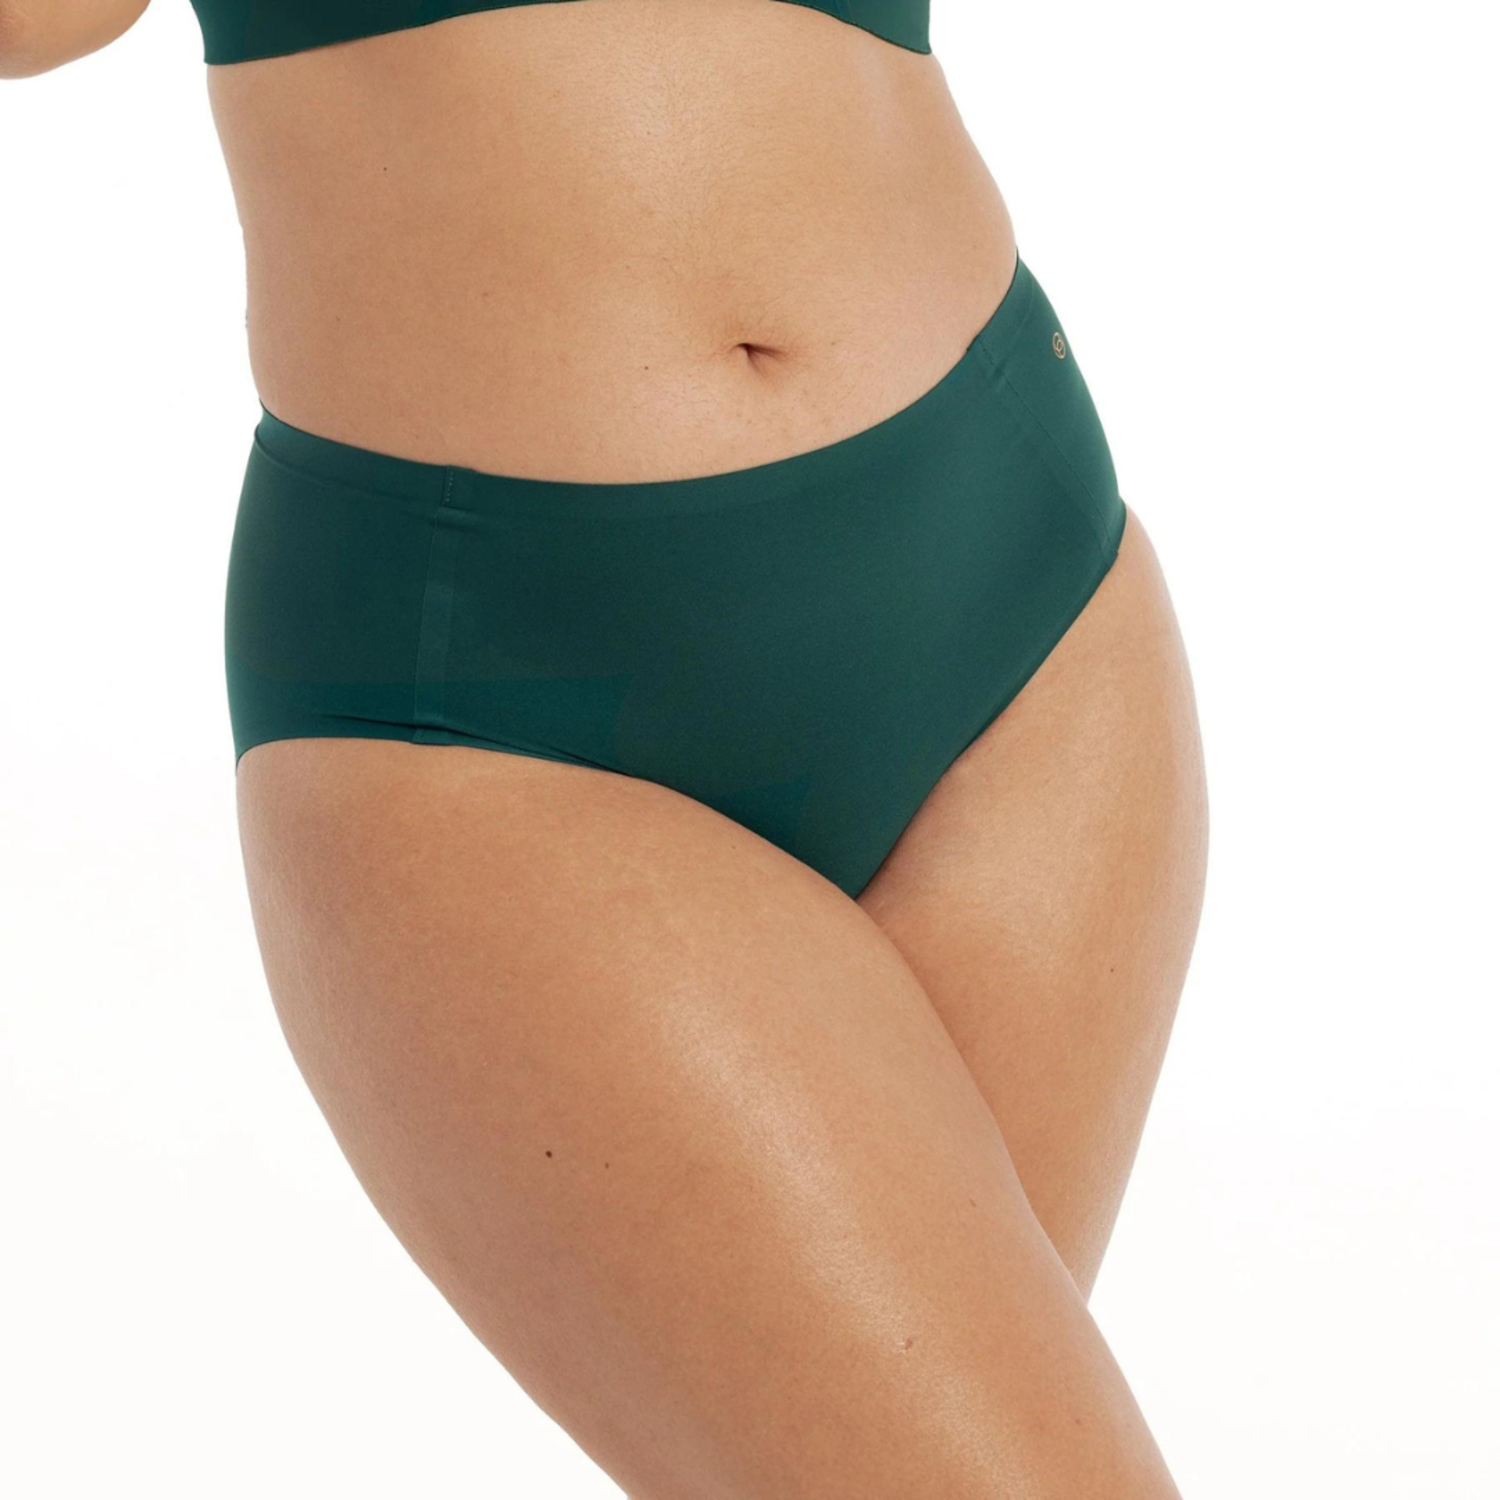 High-waisted belted bikini briefs in Dark Green and Black - La